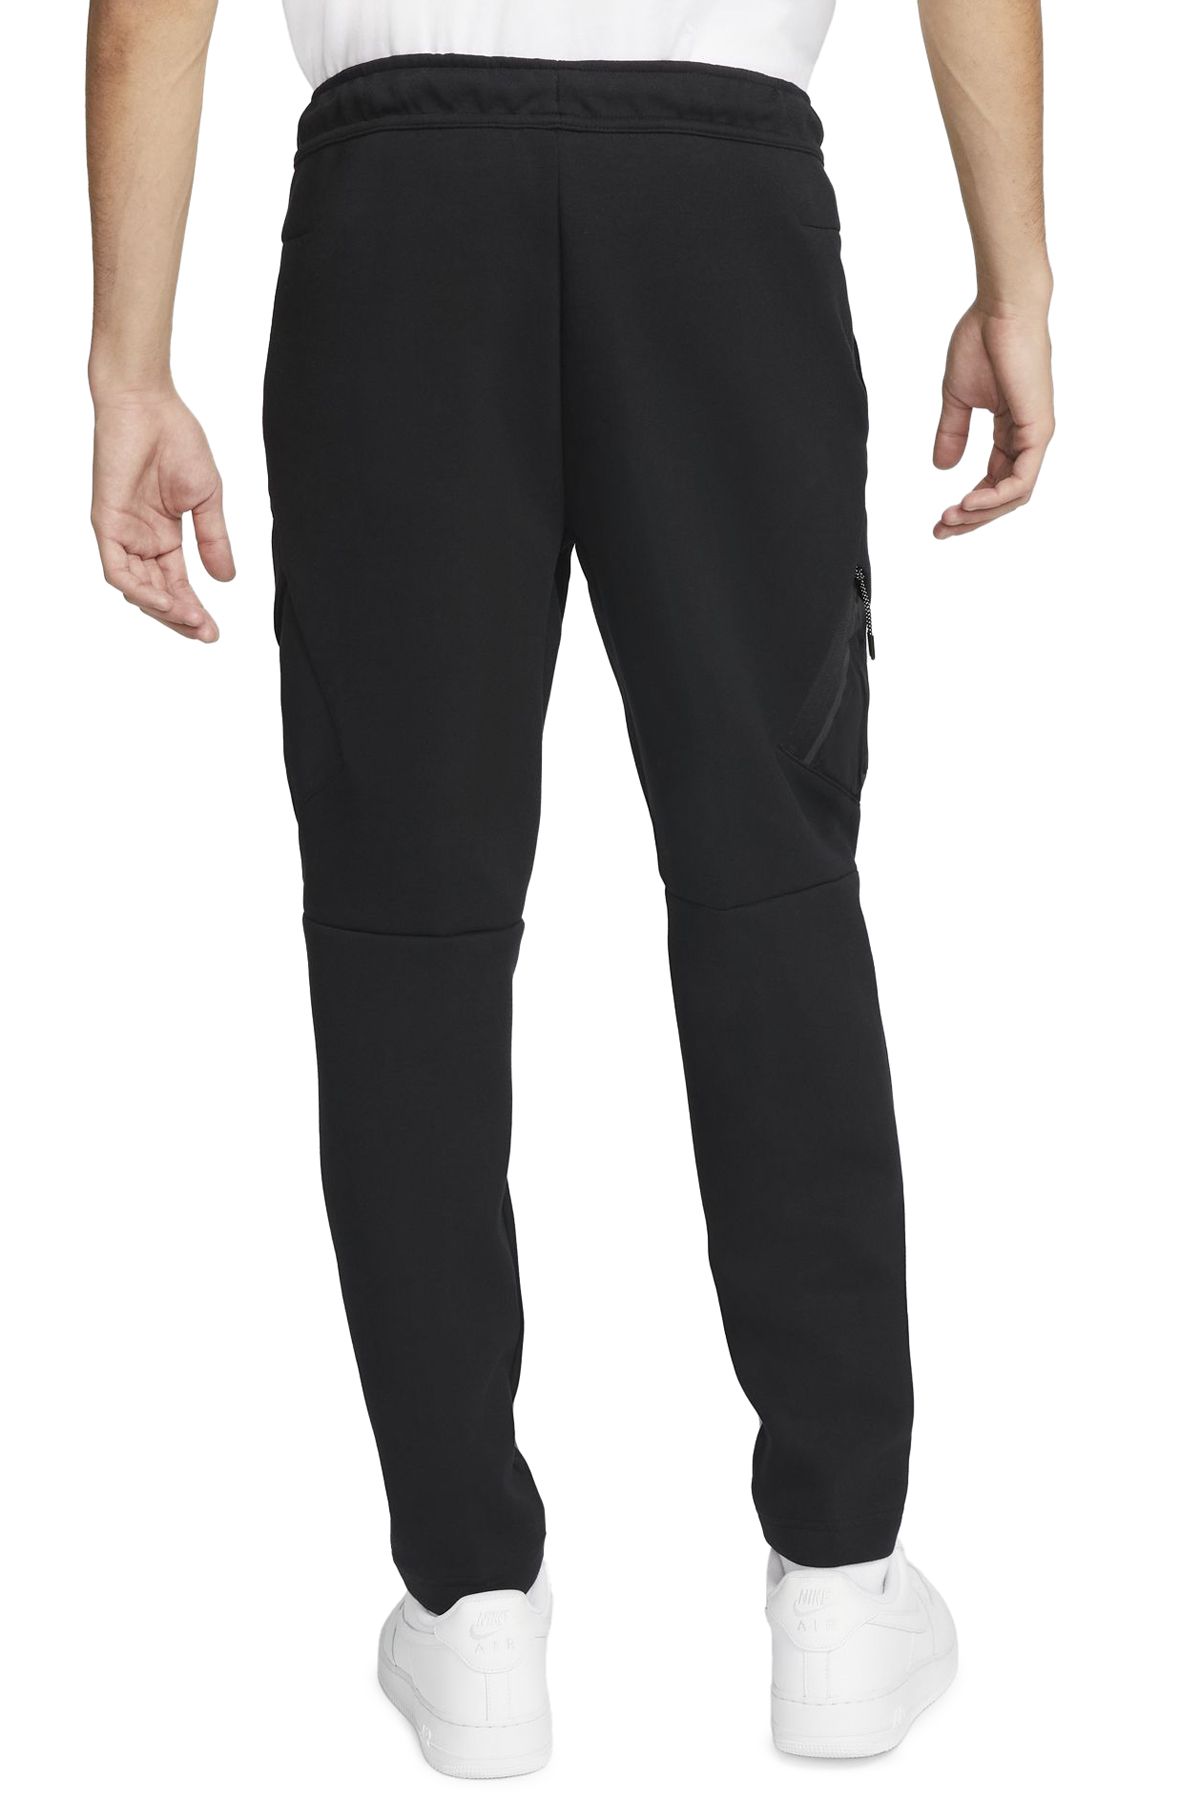 NIKE Sportswear Tech Fleece Pants DM6453 063 - Shiekh